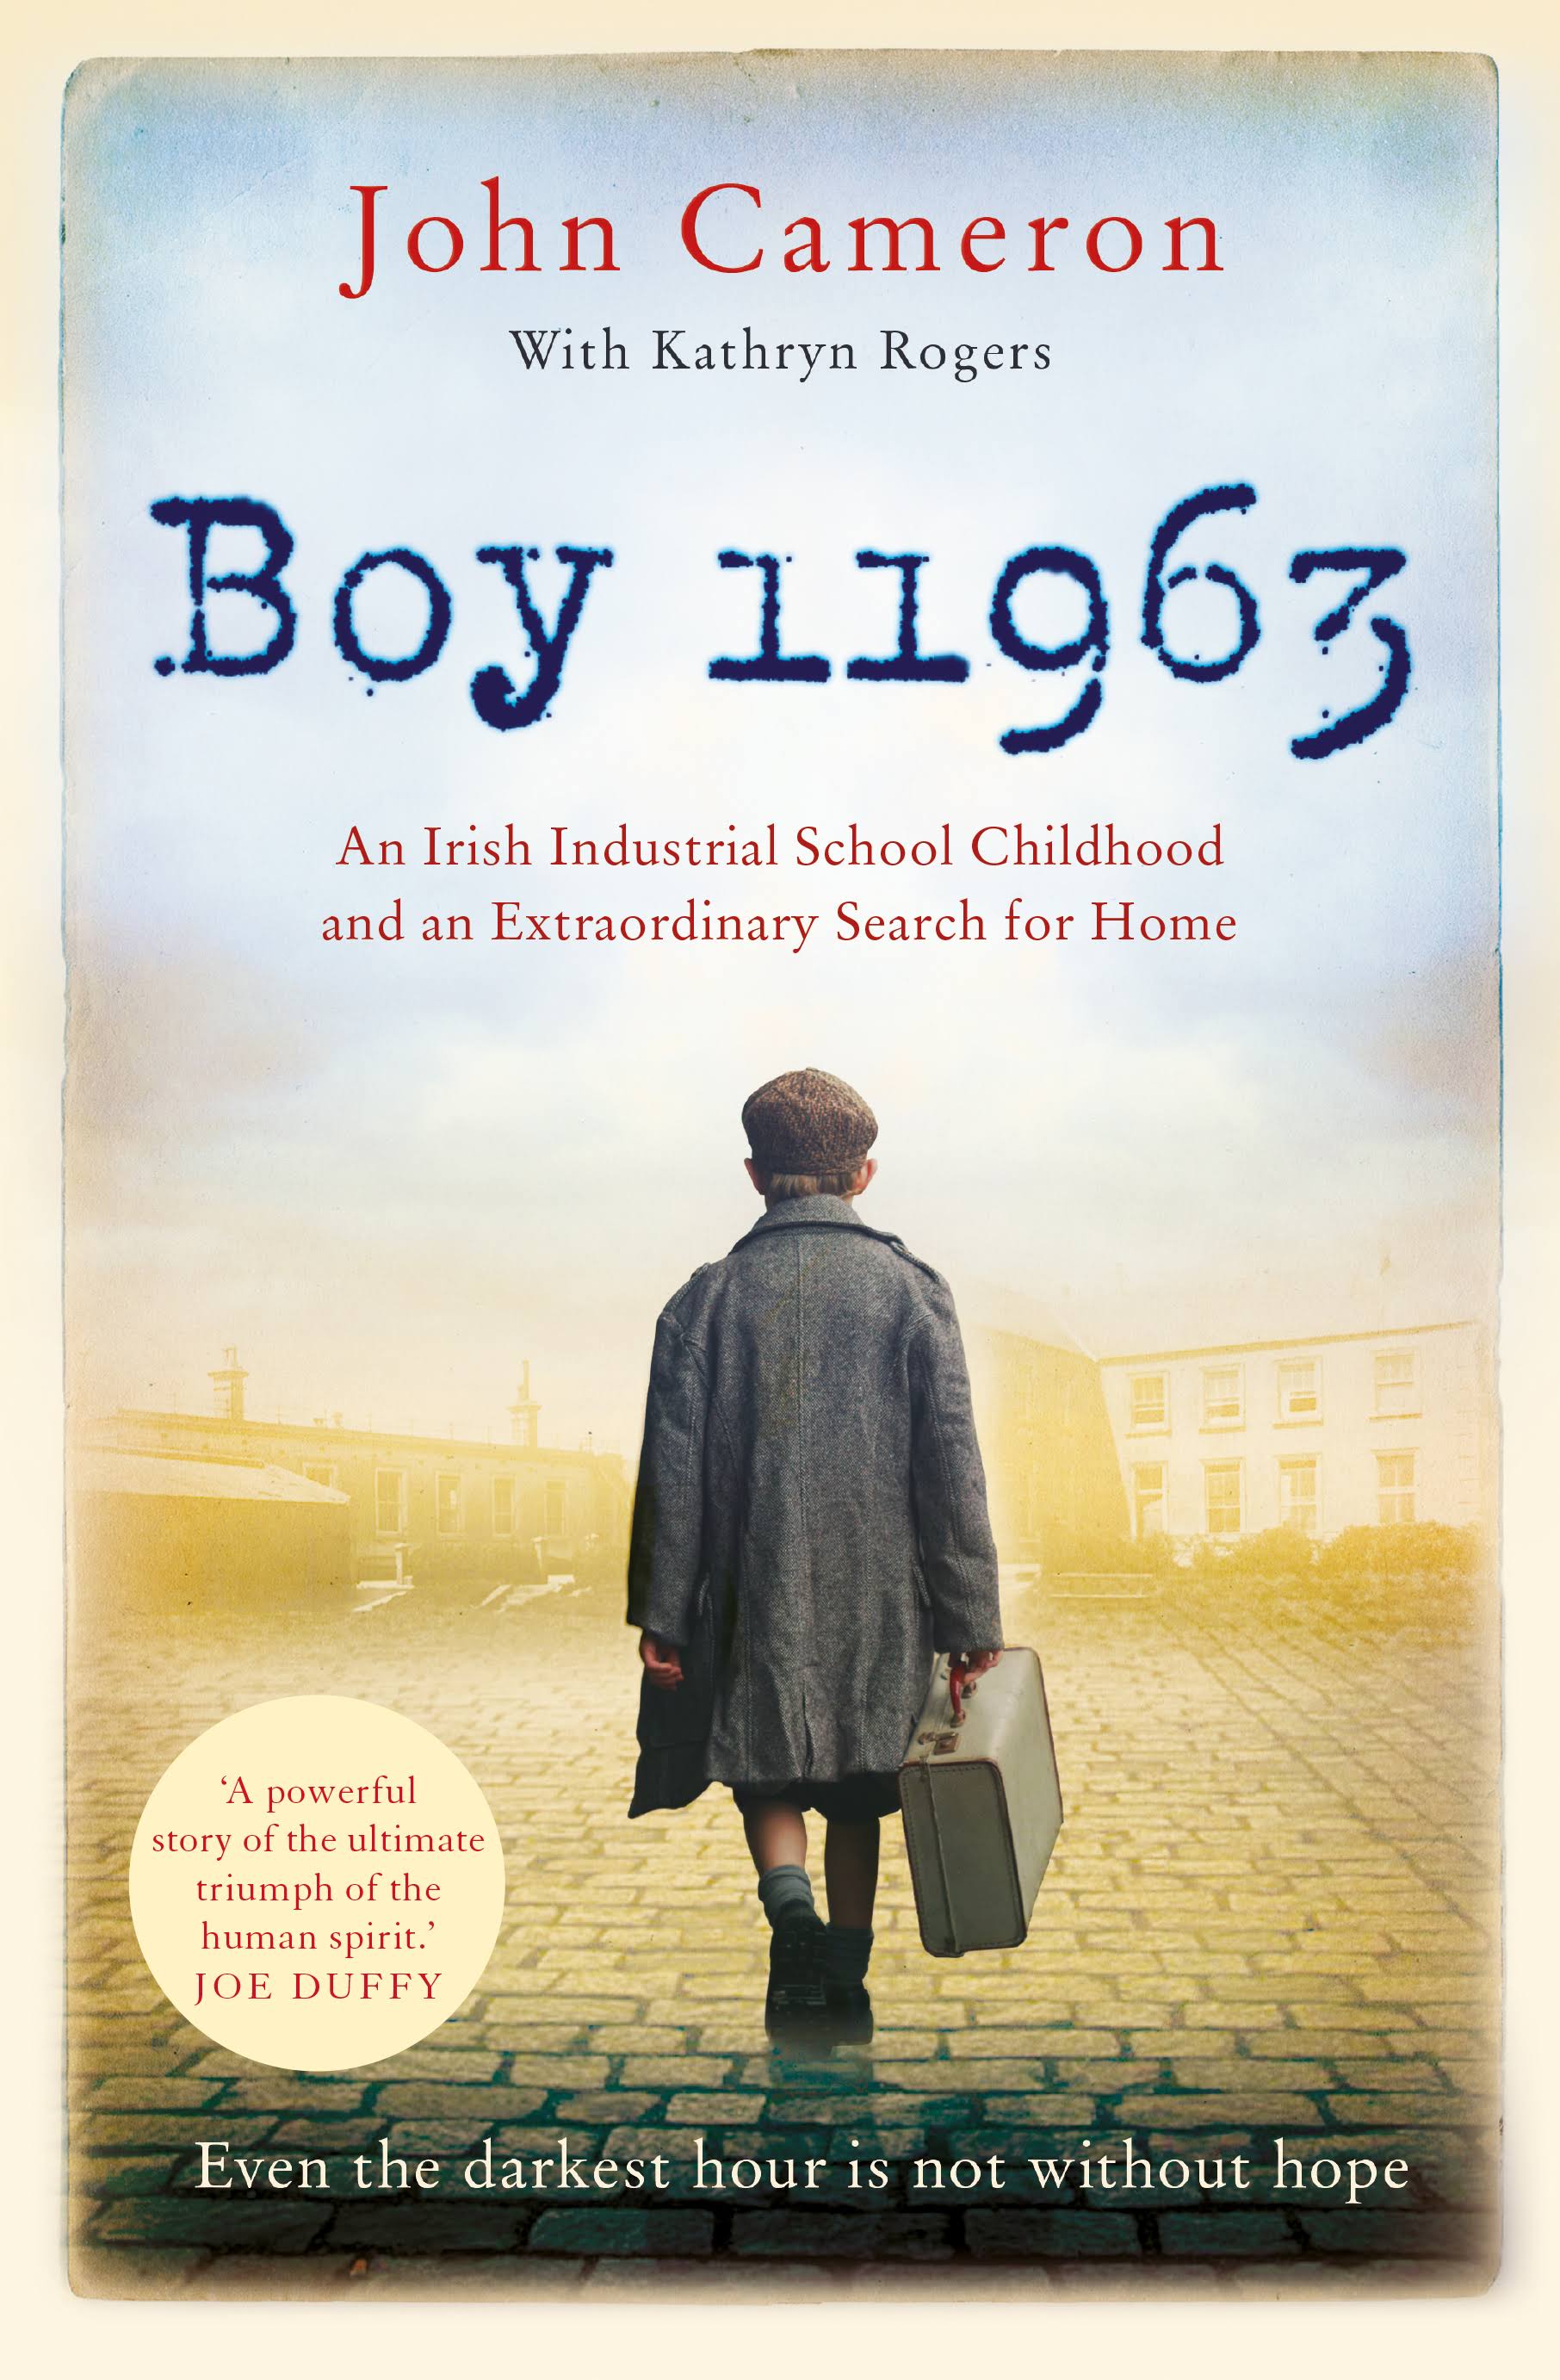 Boy 11963 [Book]